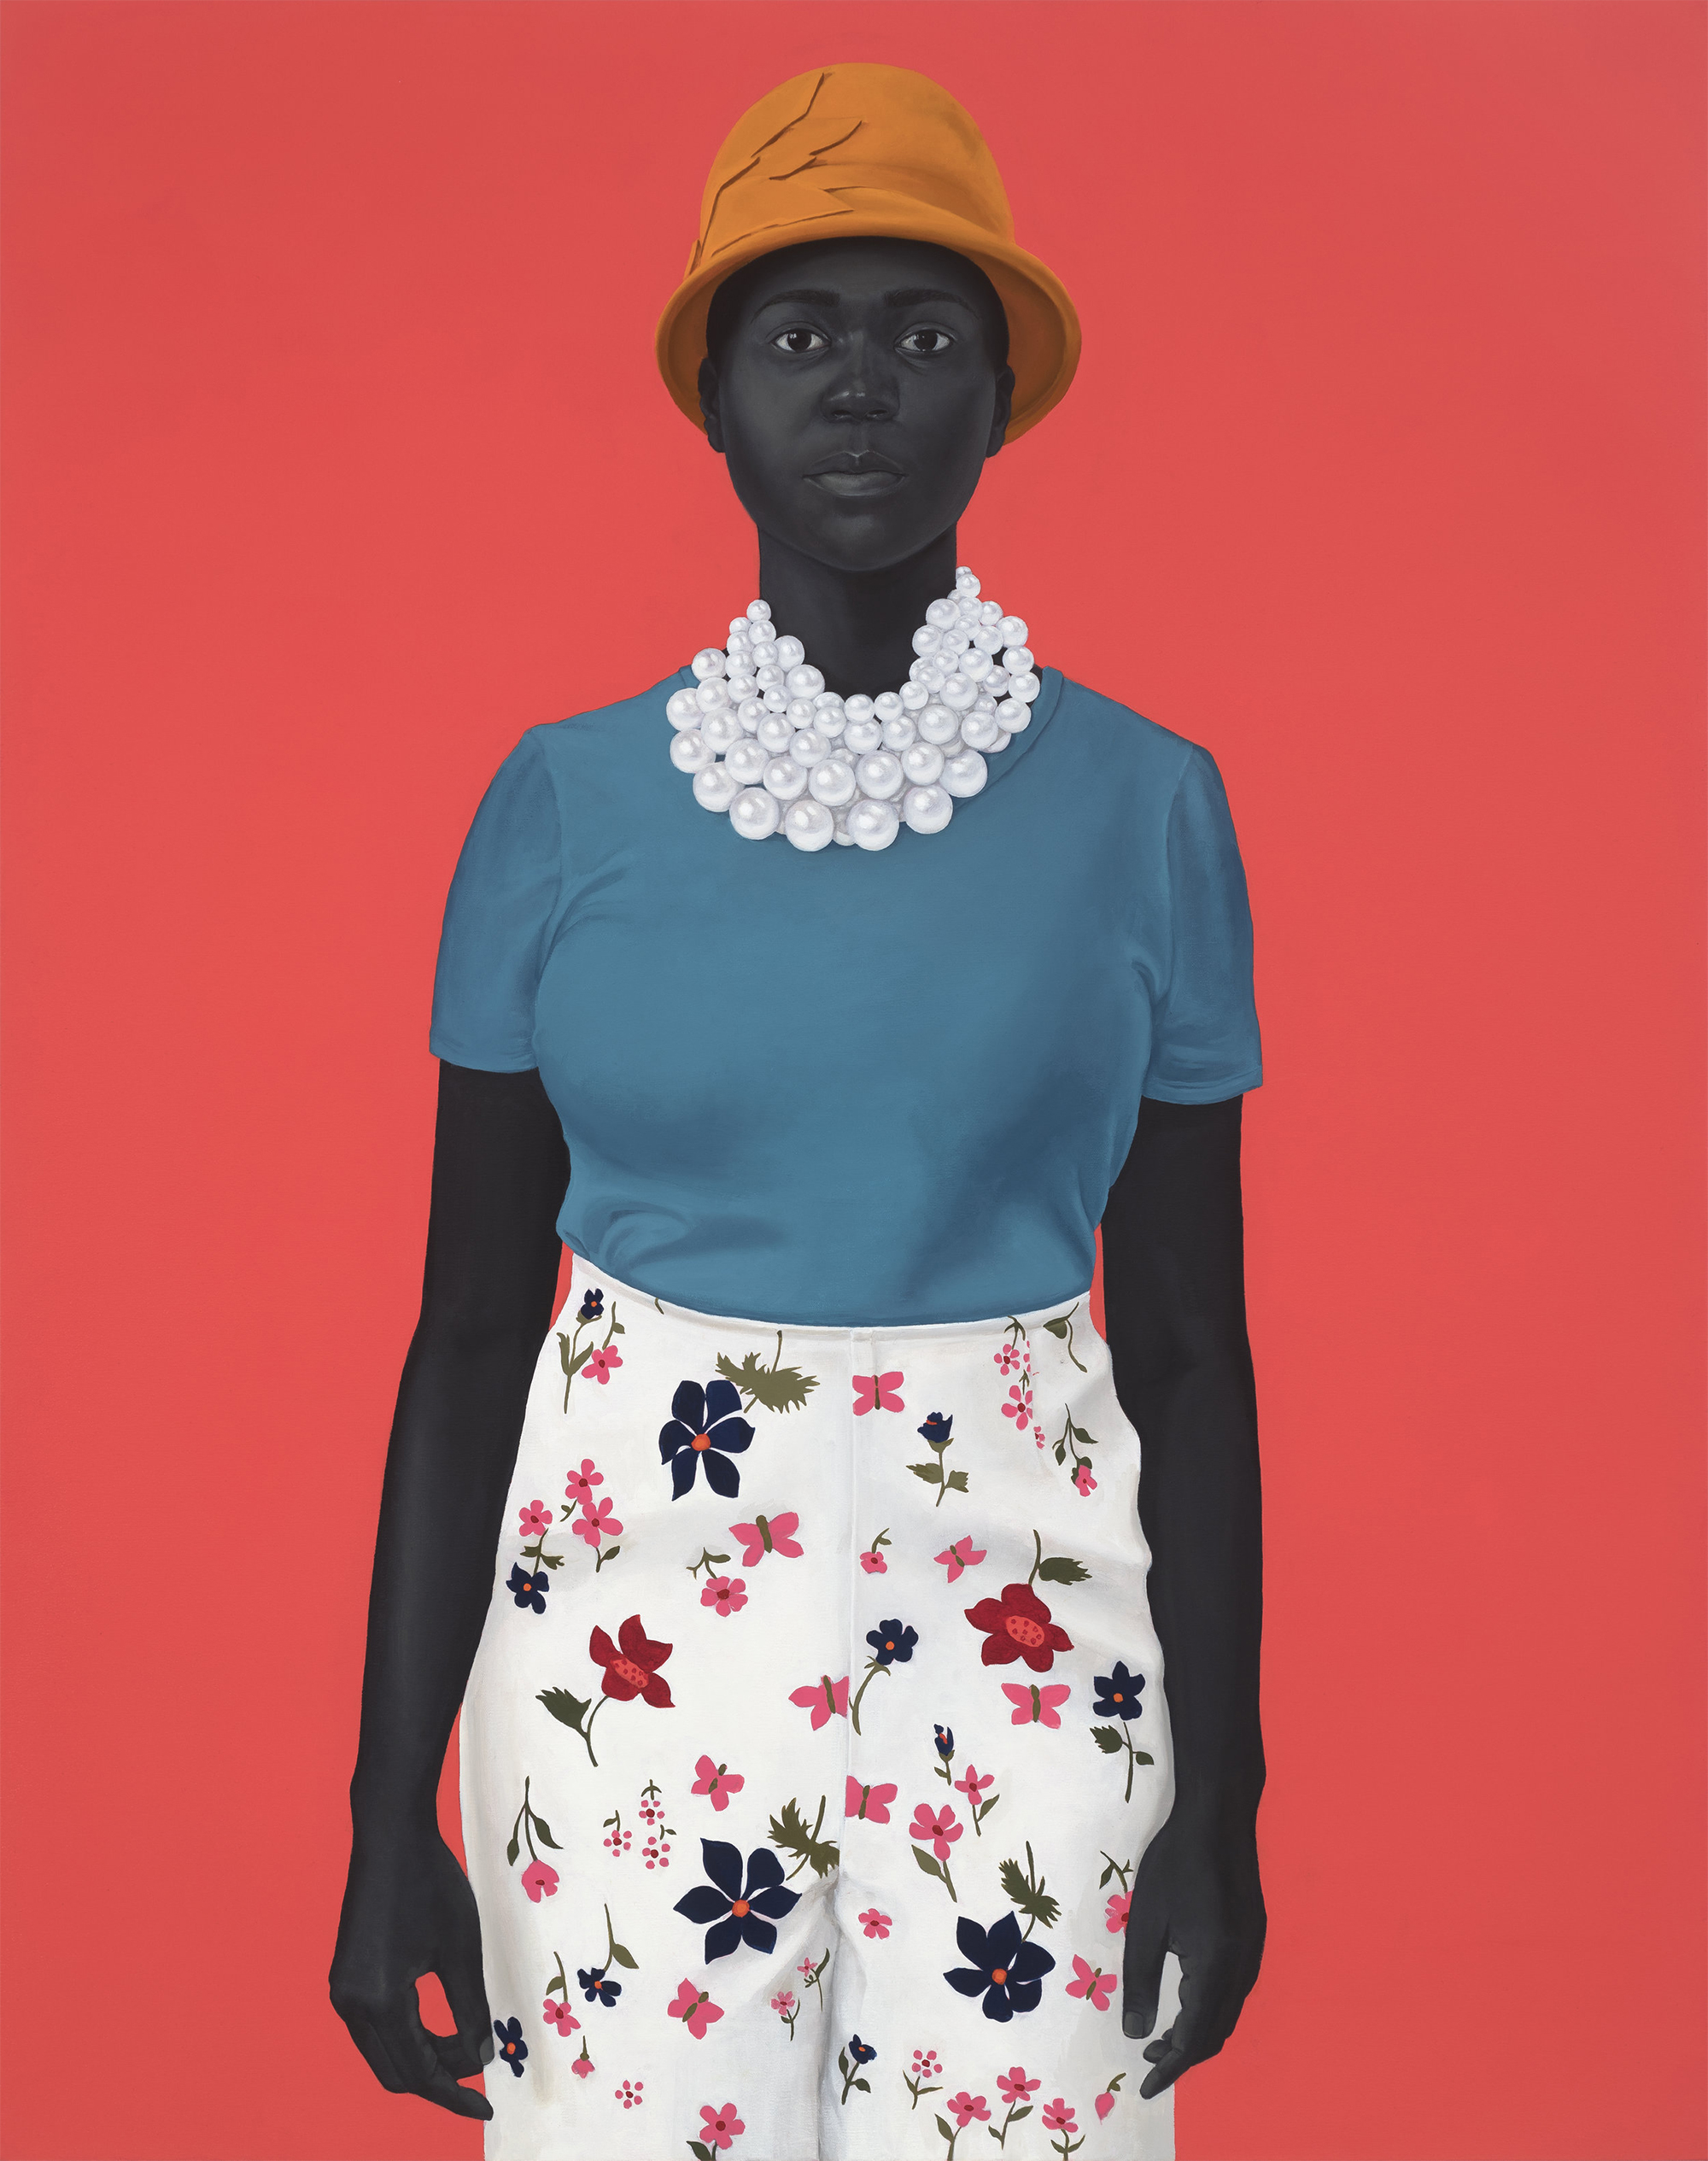 Stunning Portraits to Celebrate Afro-American People – Fubiz Media